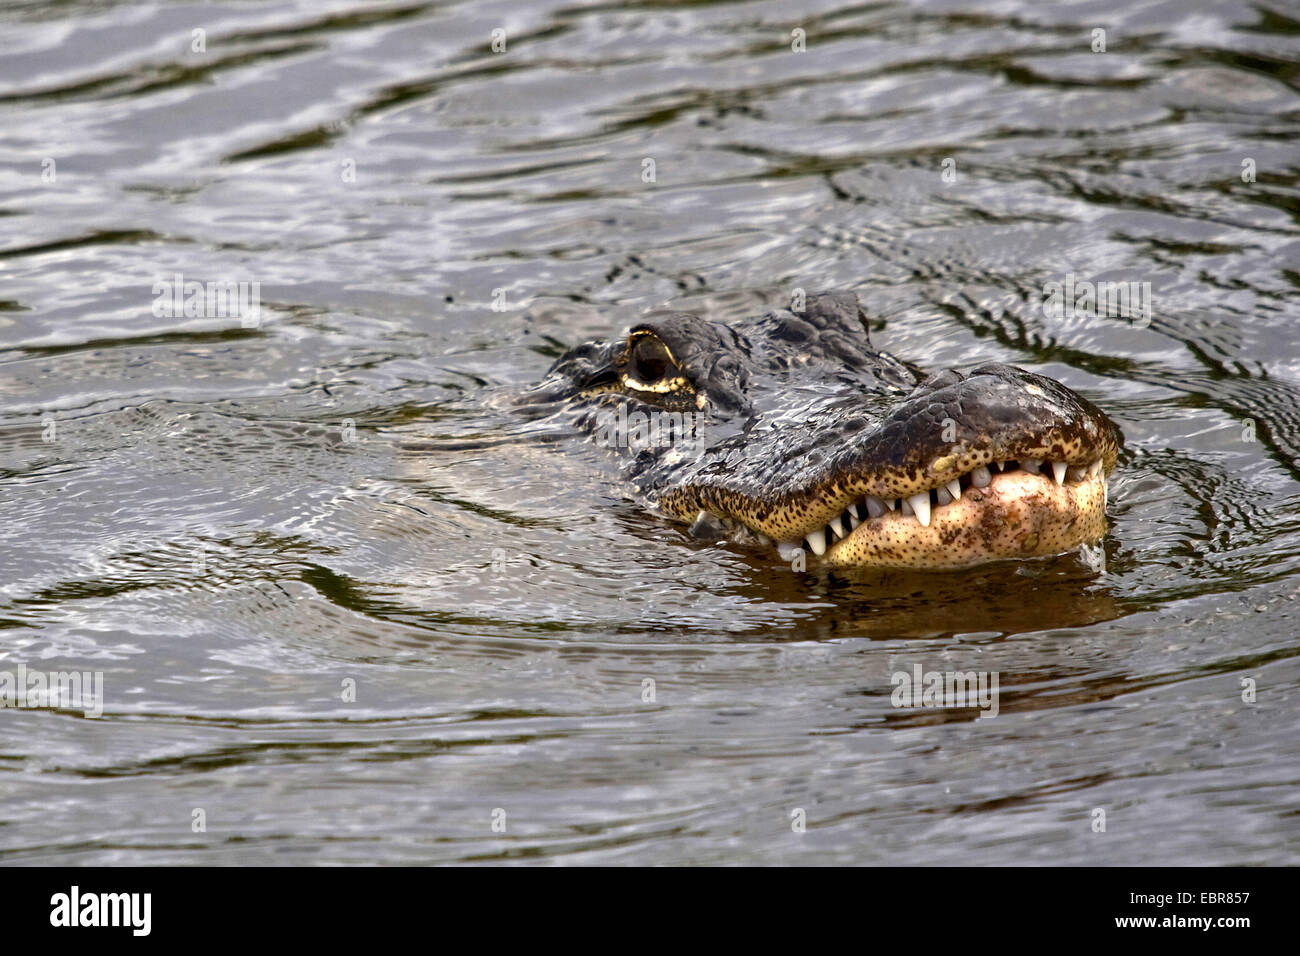 American alligator (Alligator mississippiensis), portrait in water, USA, Florida, Everglades National Park Stock Photo